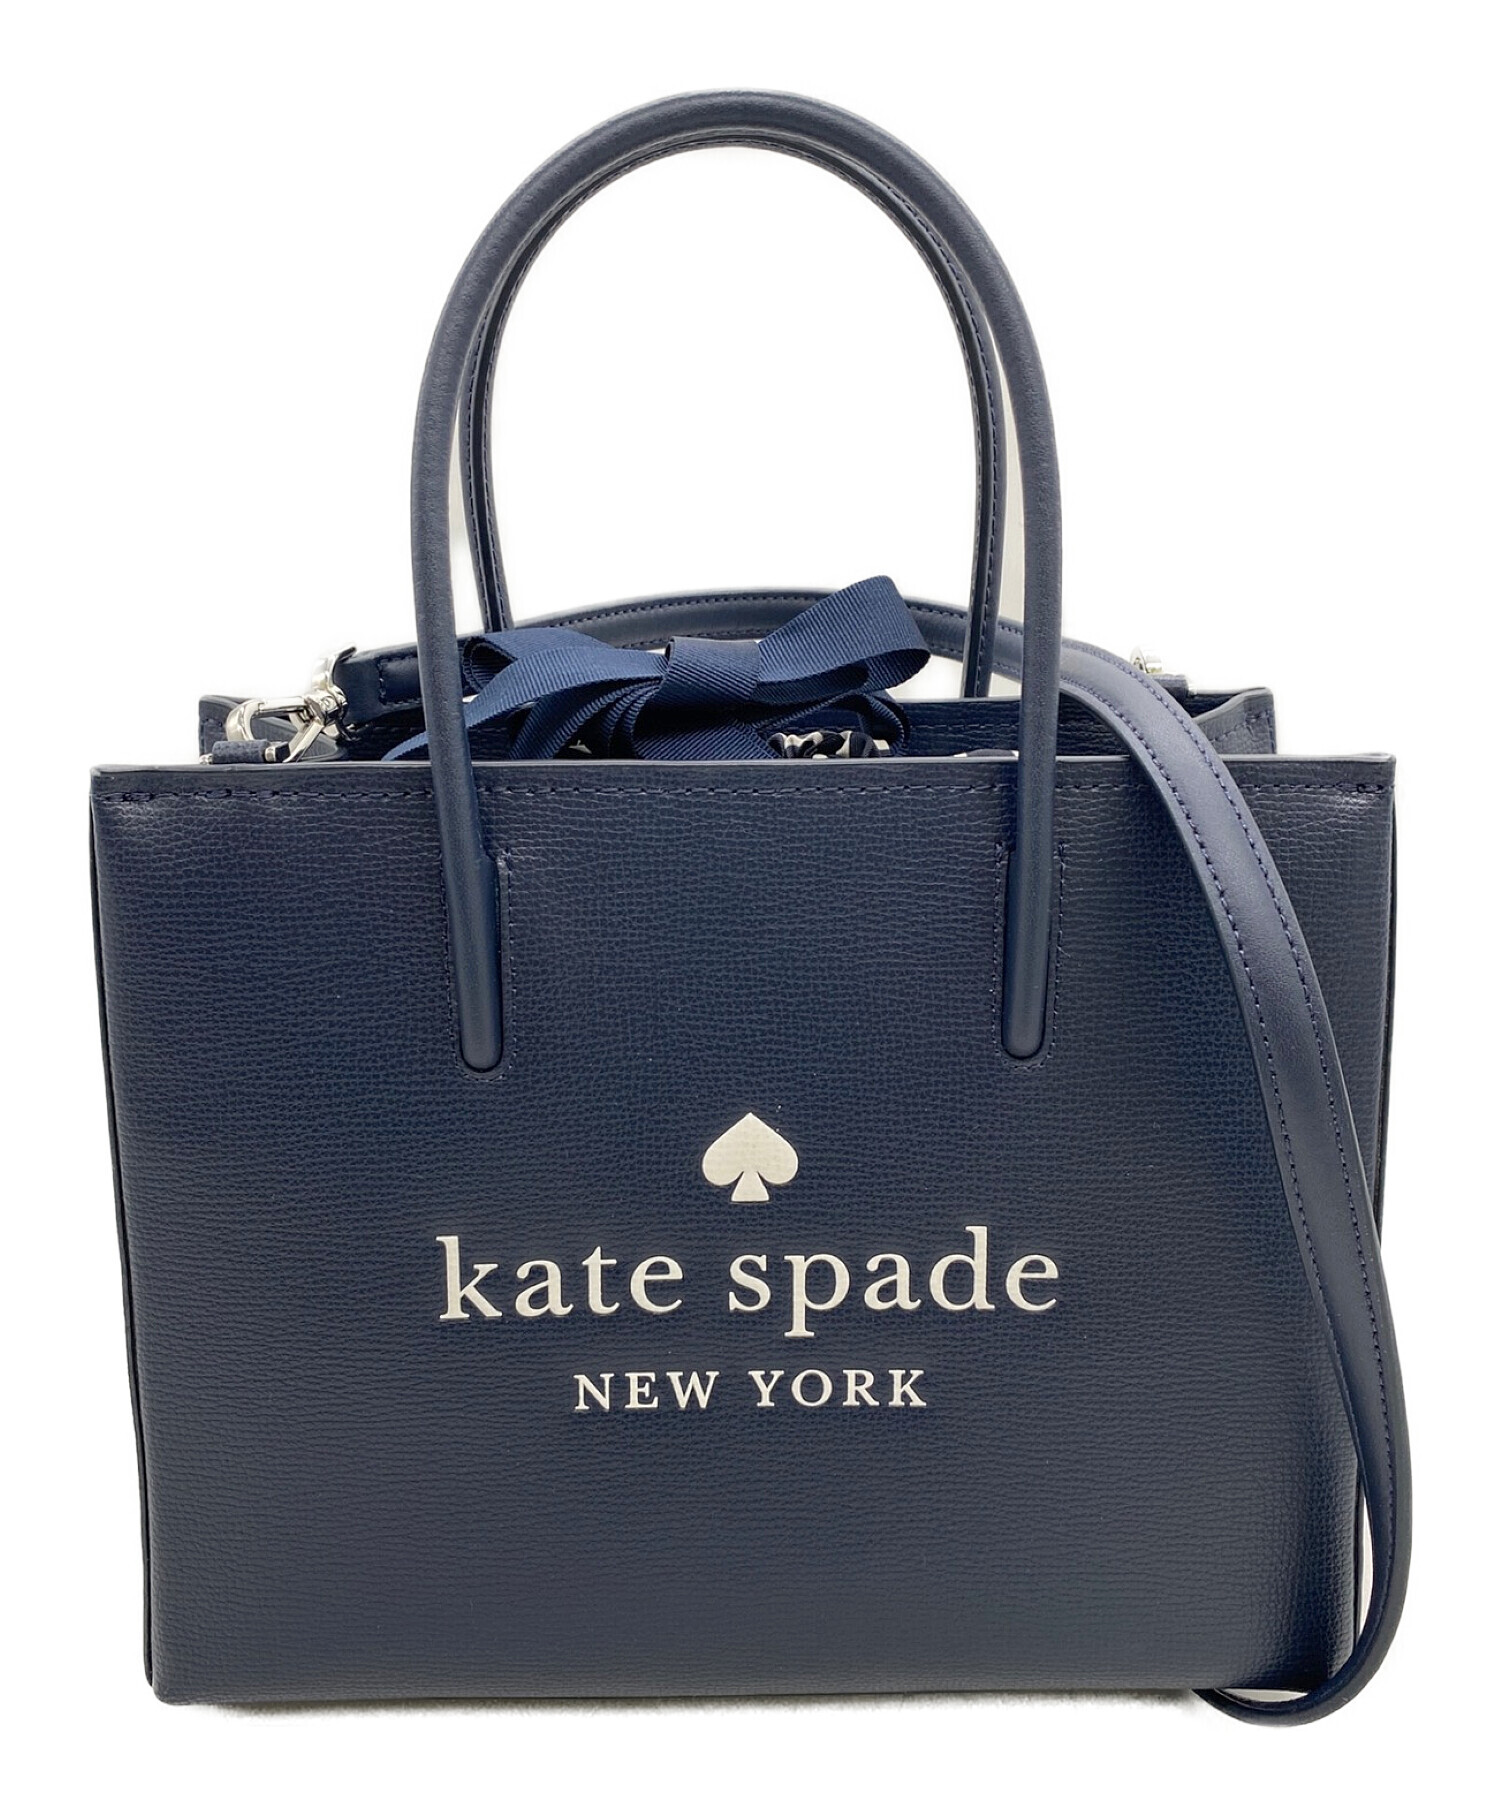 Kate Spade (ケイトスペード) トリスタレザーショッパーバッグ ネイビー×ホワイト